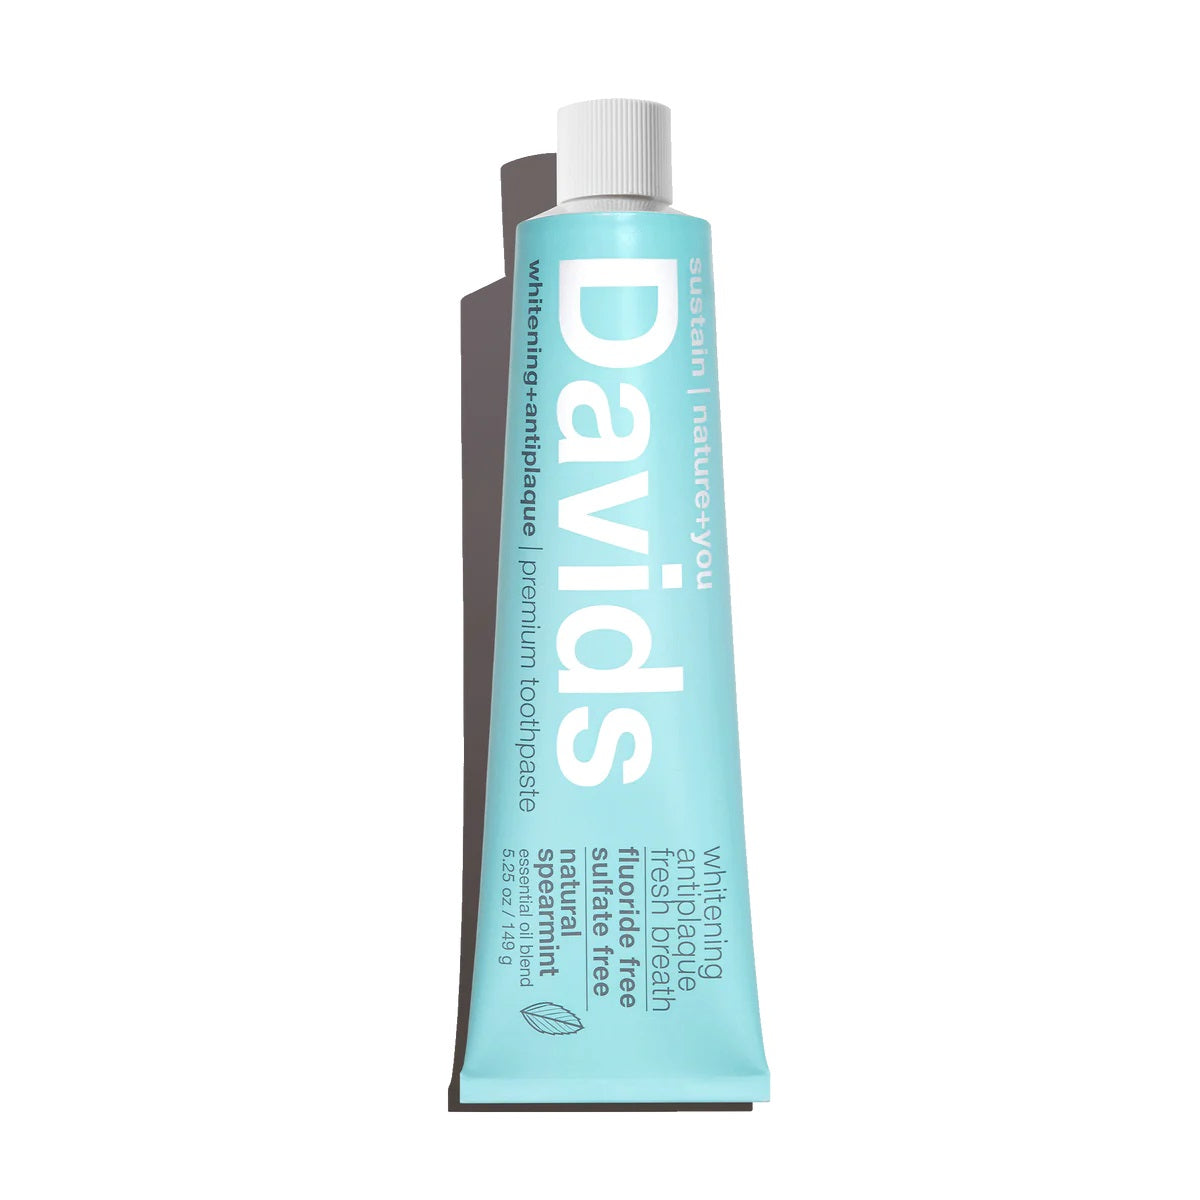 DAVID'S NATURAL TOOTHPASTE Davids Premium Natural Toothpaste Spearmint